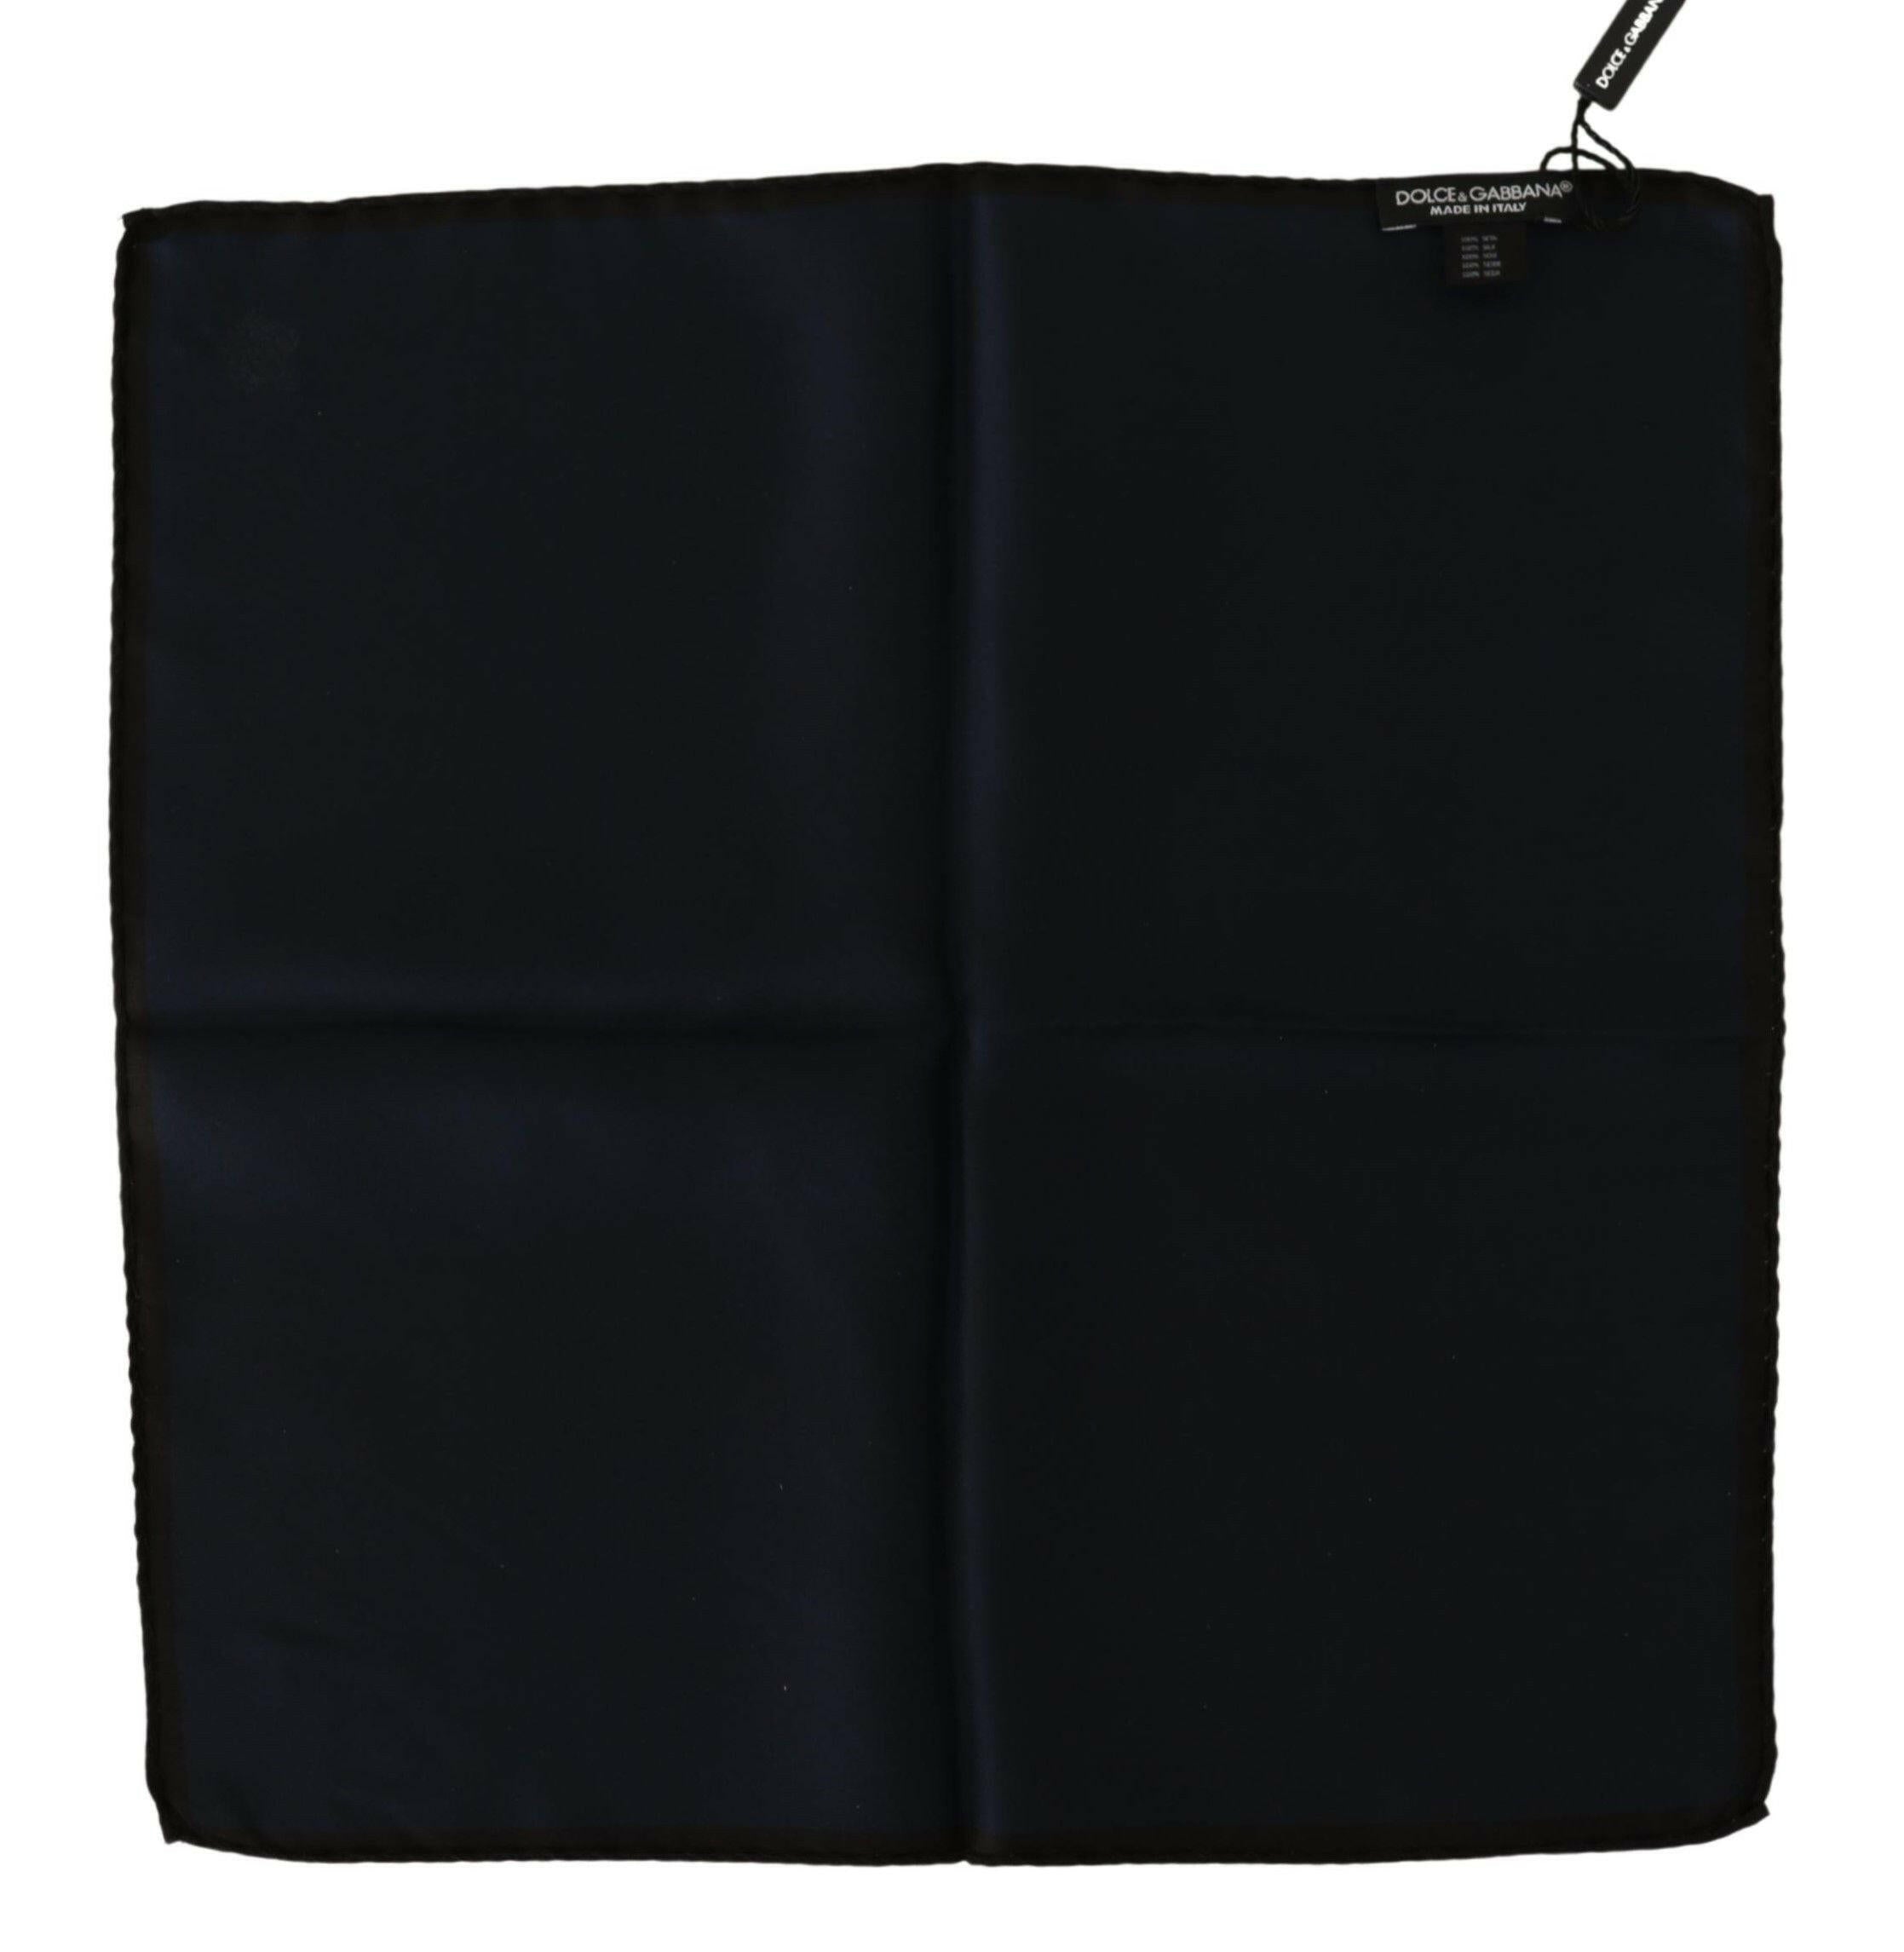 Dolce & Gabbana Black Square Handkerchief 100% Silk Scarf - GENUINE AUTHENTIC BRAND LLC  